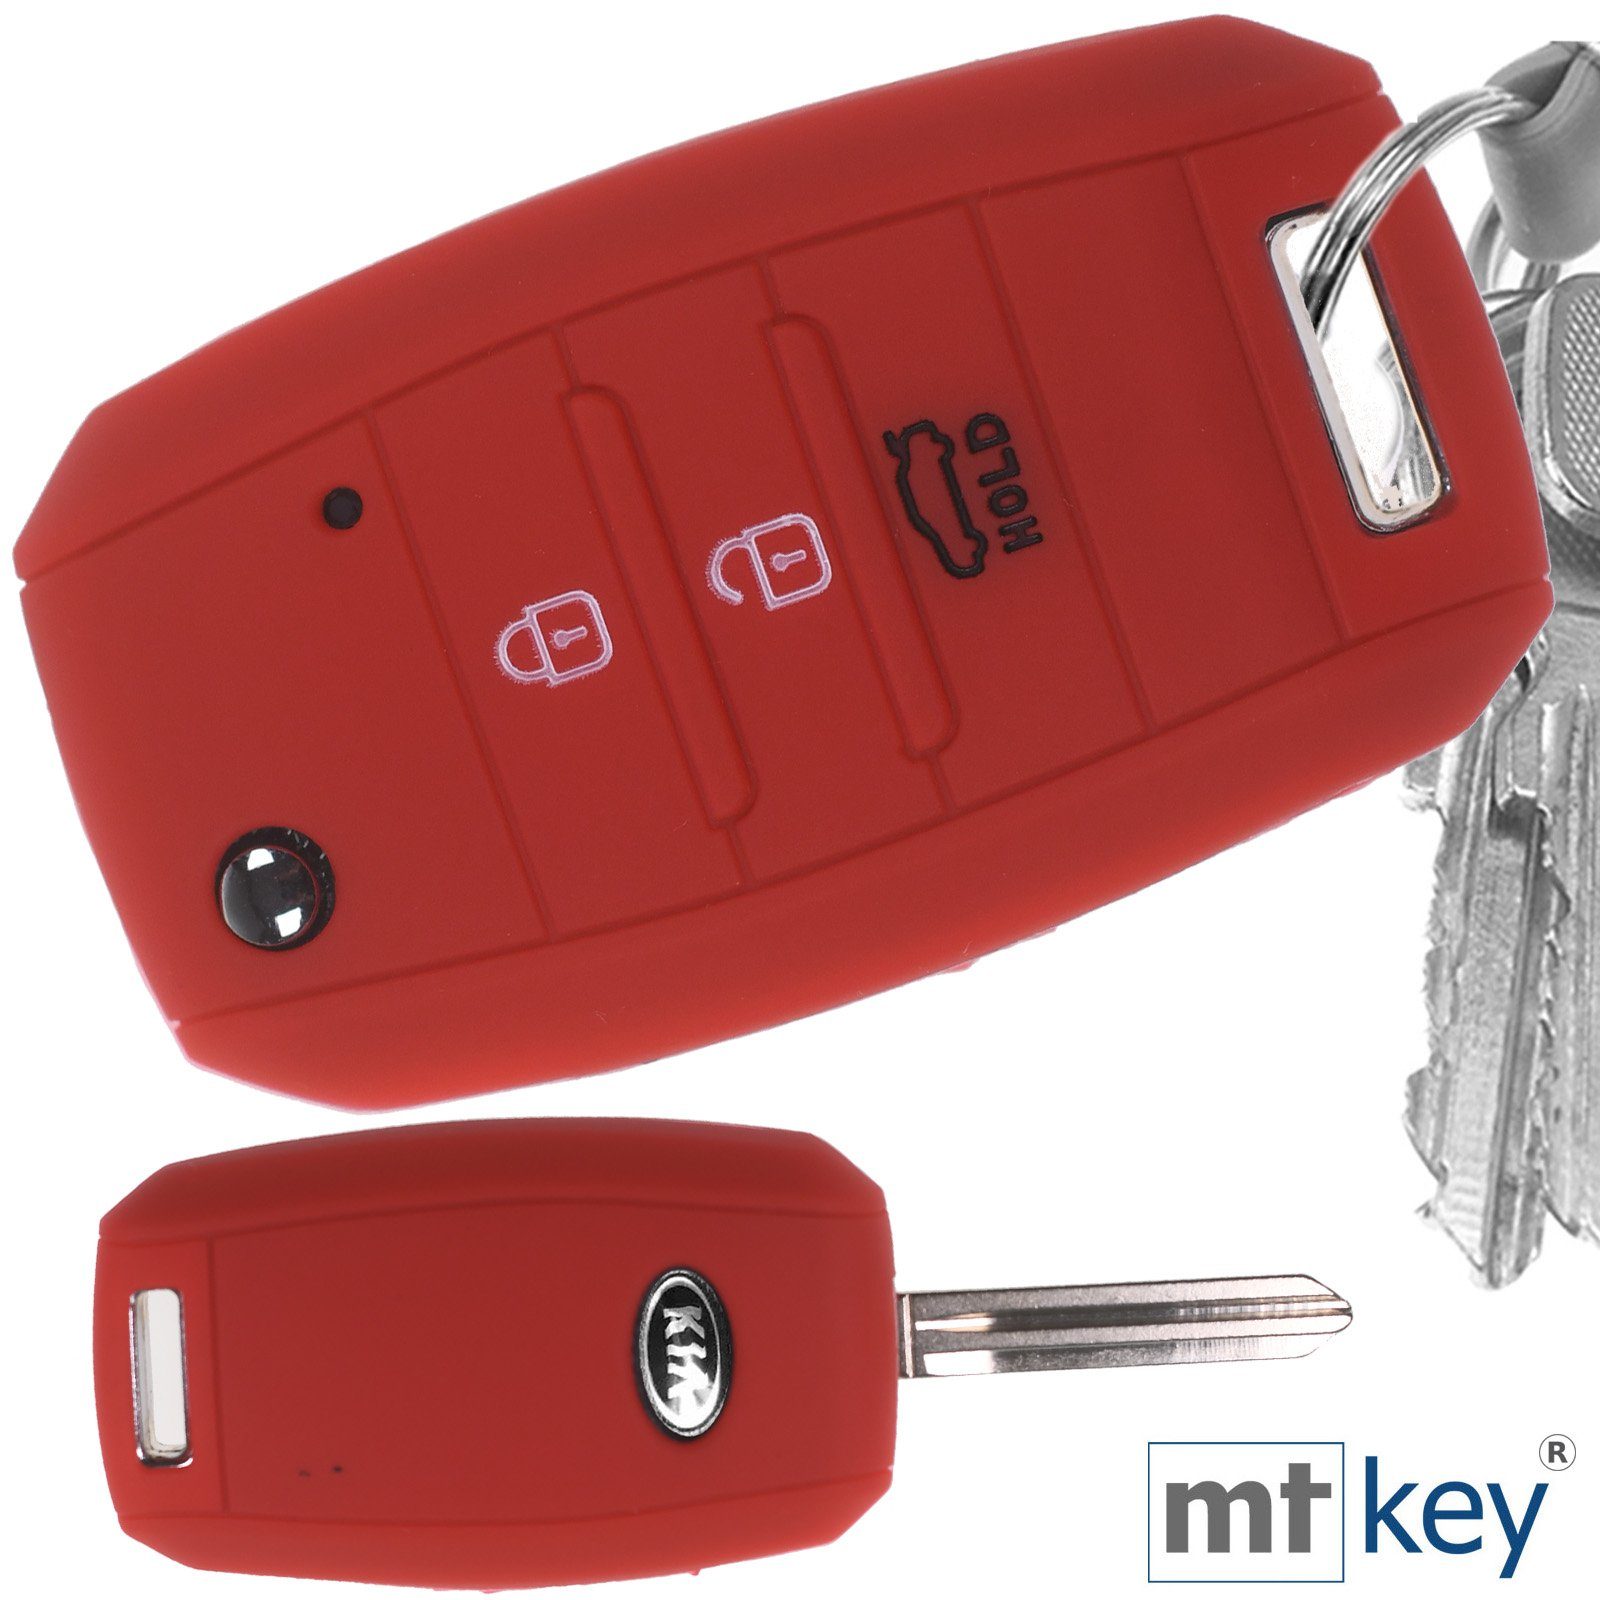 KIA Schlüsseltasche Silikon mt-key Schutzhülle Soul Tasten Softcase 3 für Schlüssel Ceed Stonicens Sportage Rot, Picantio Rio Autoschlüssel